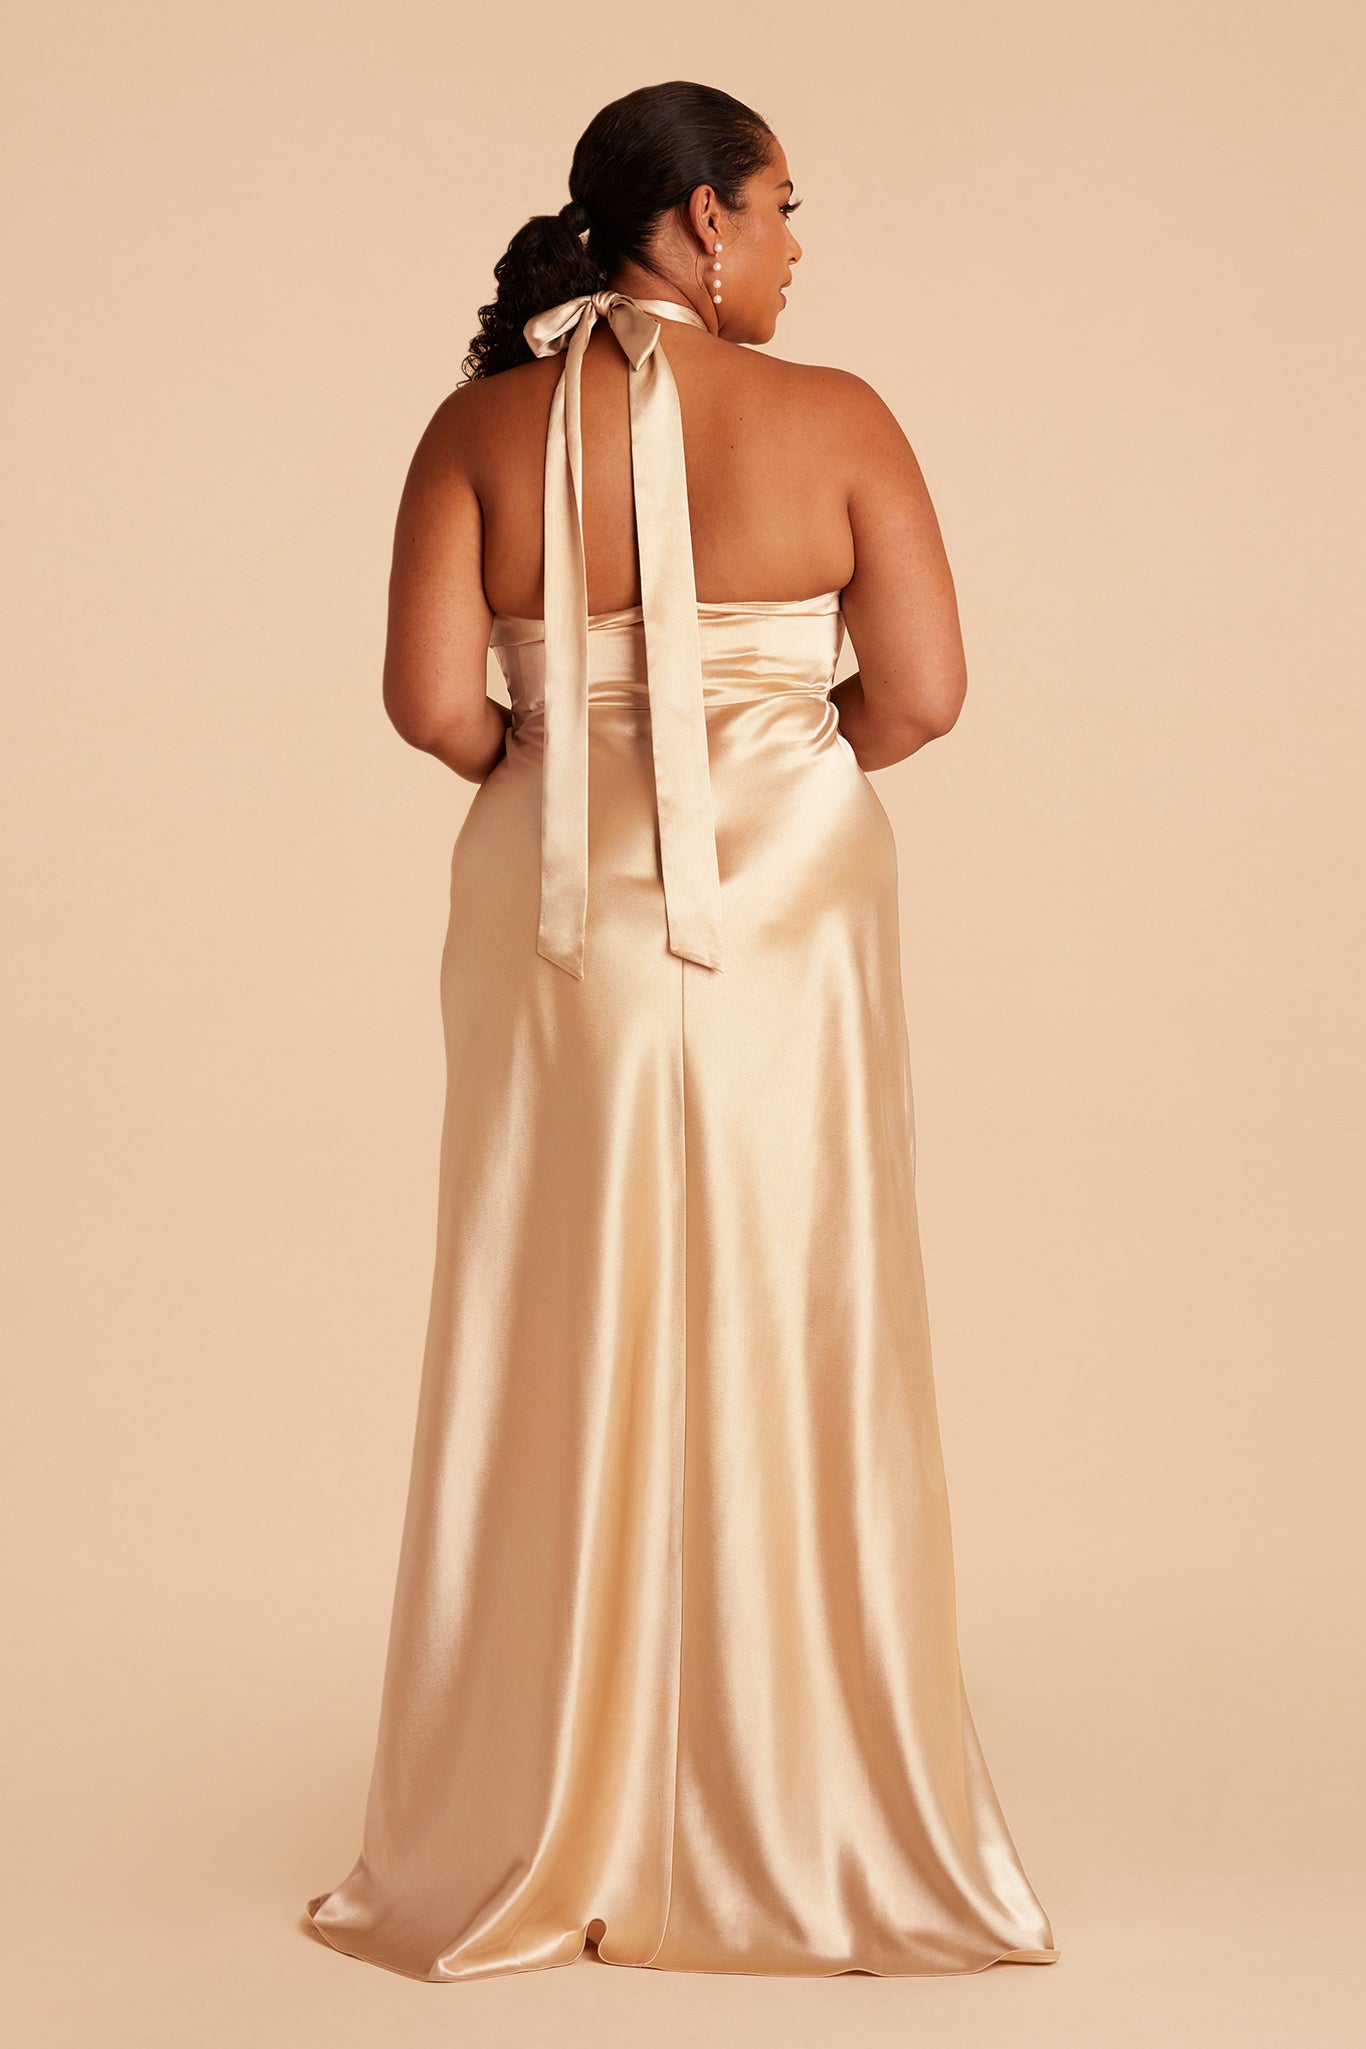 Monica Satin Dress Curve dress in gold satin by Birdy Grey, back view